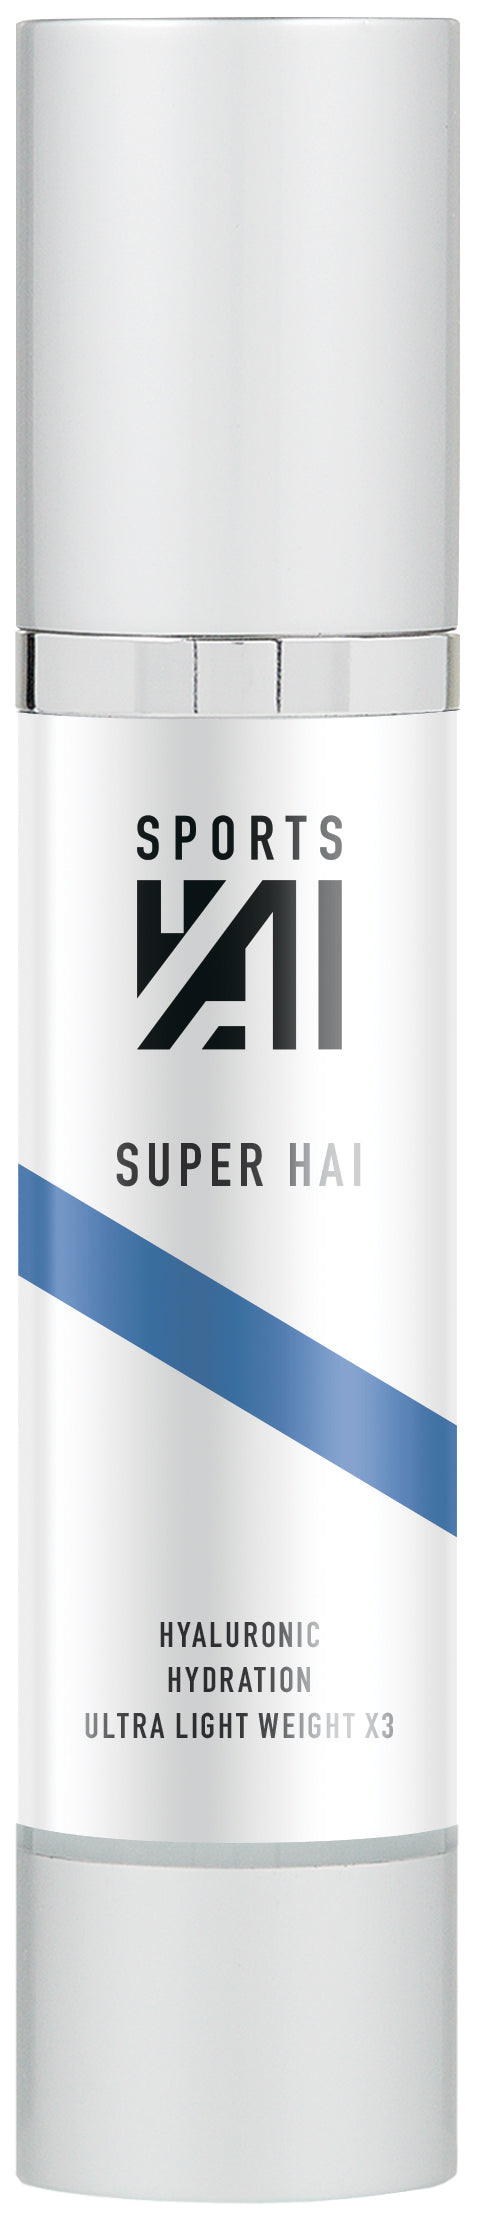 Sportshai - Hyaluronic - Super HAI serum